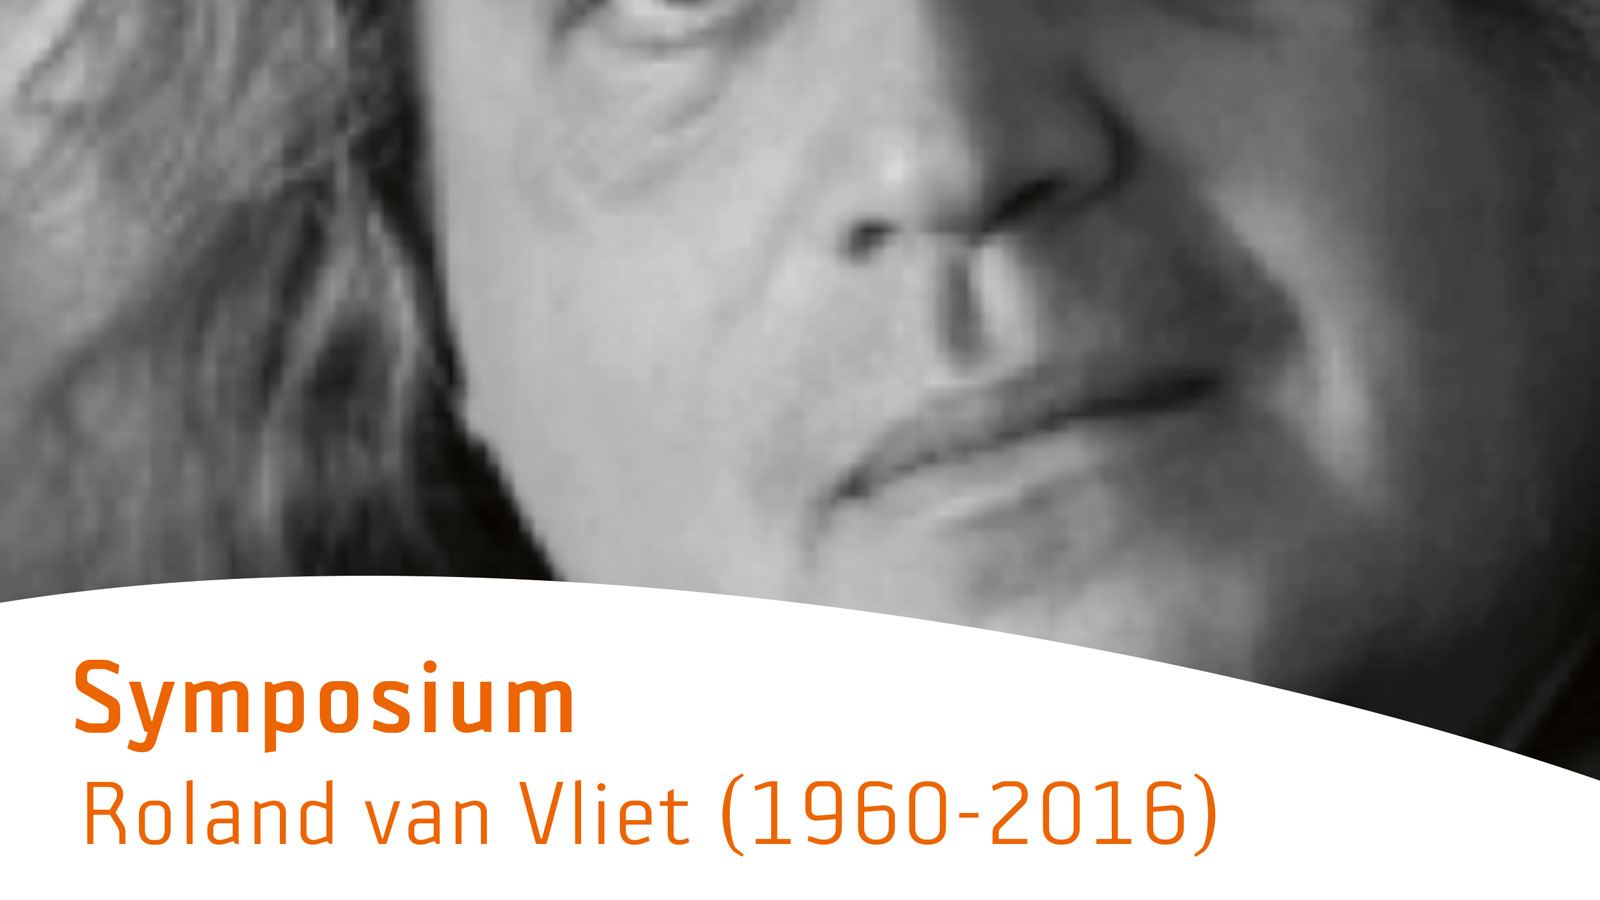  Symposium Roland van Vliet (1960-2016)